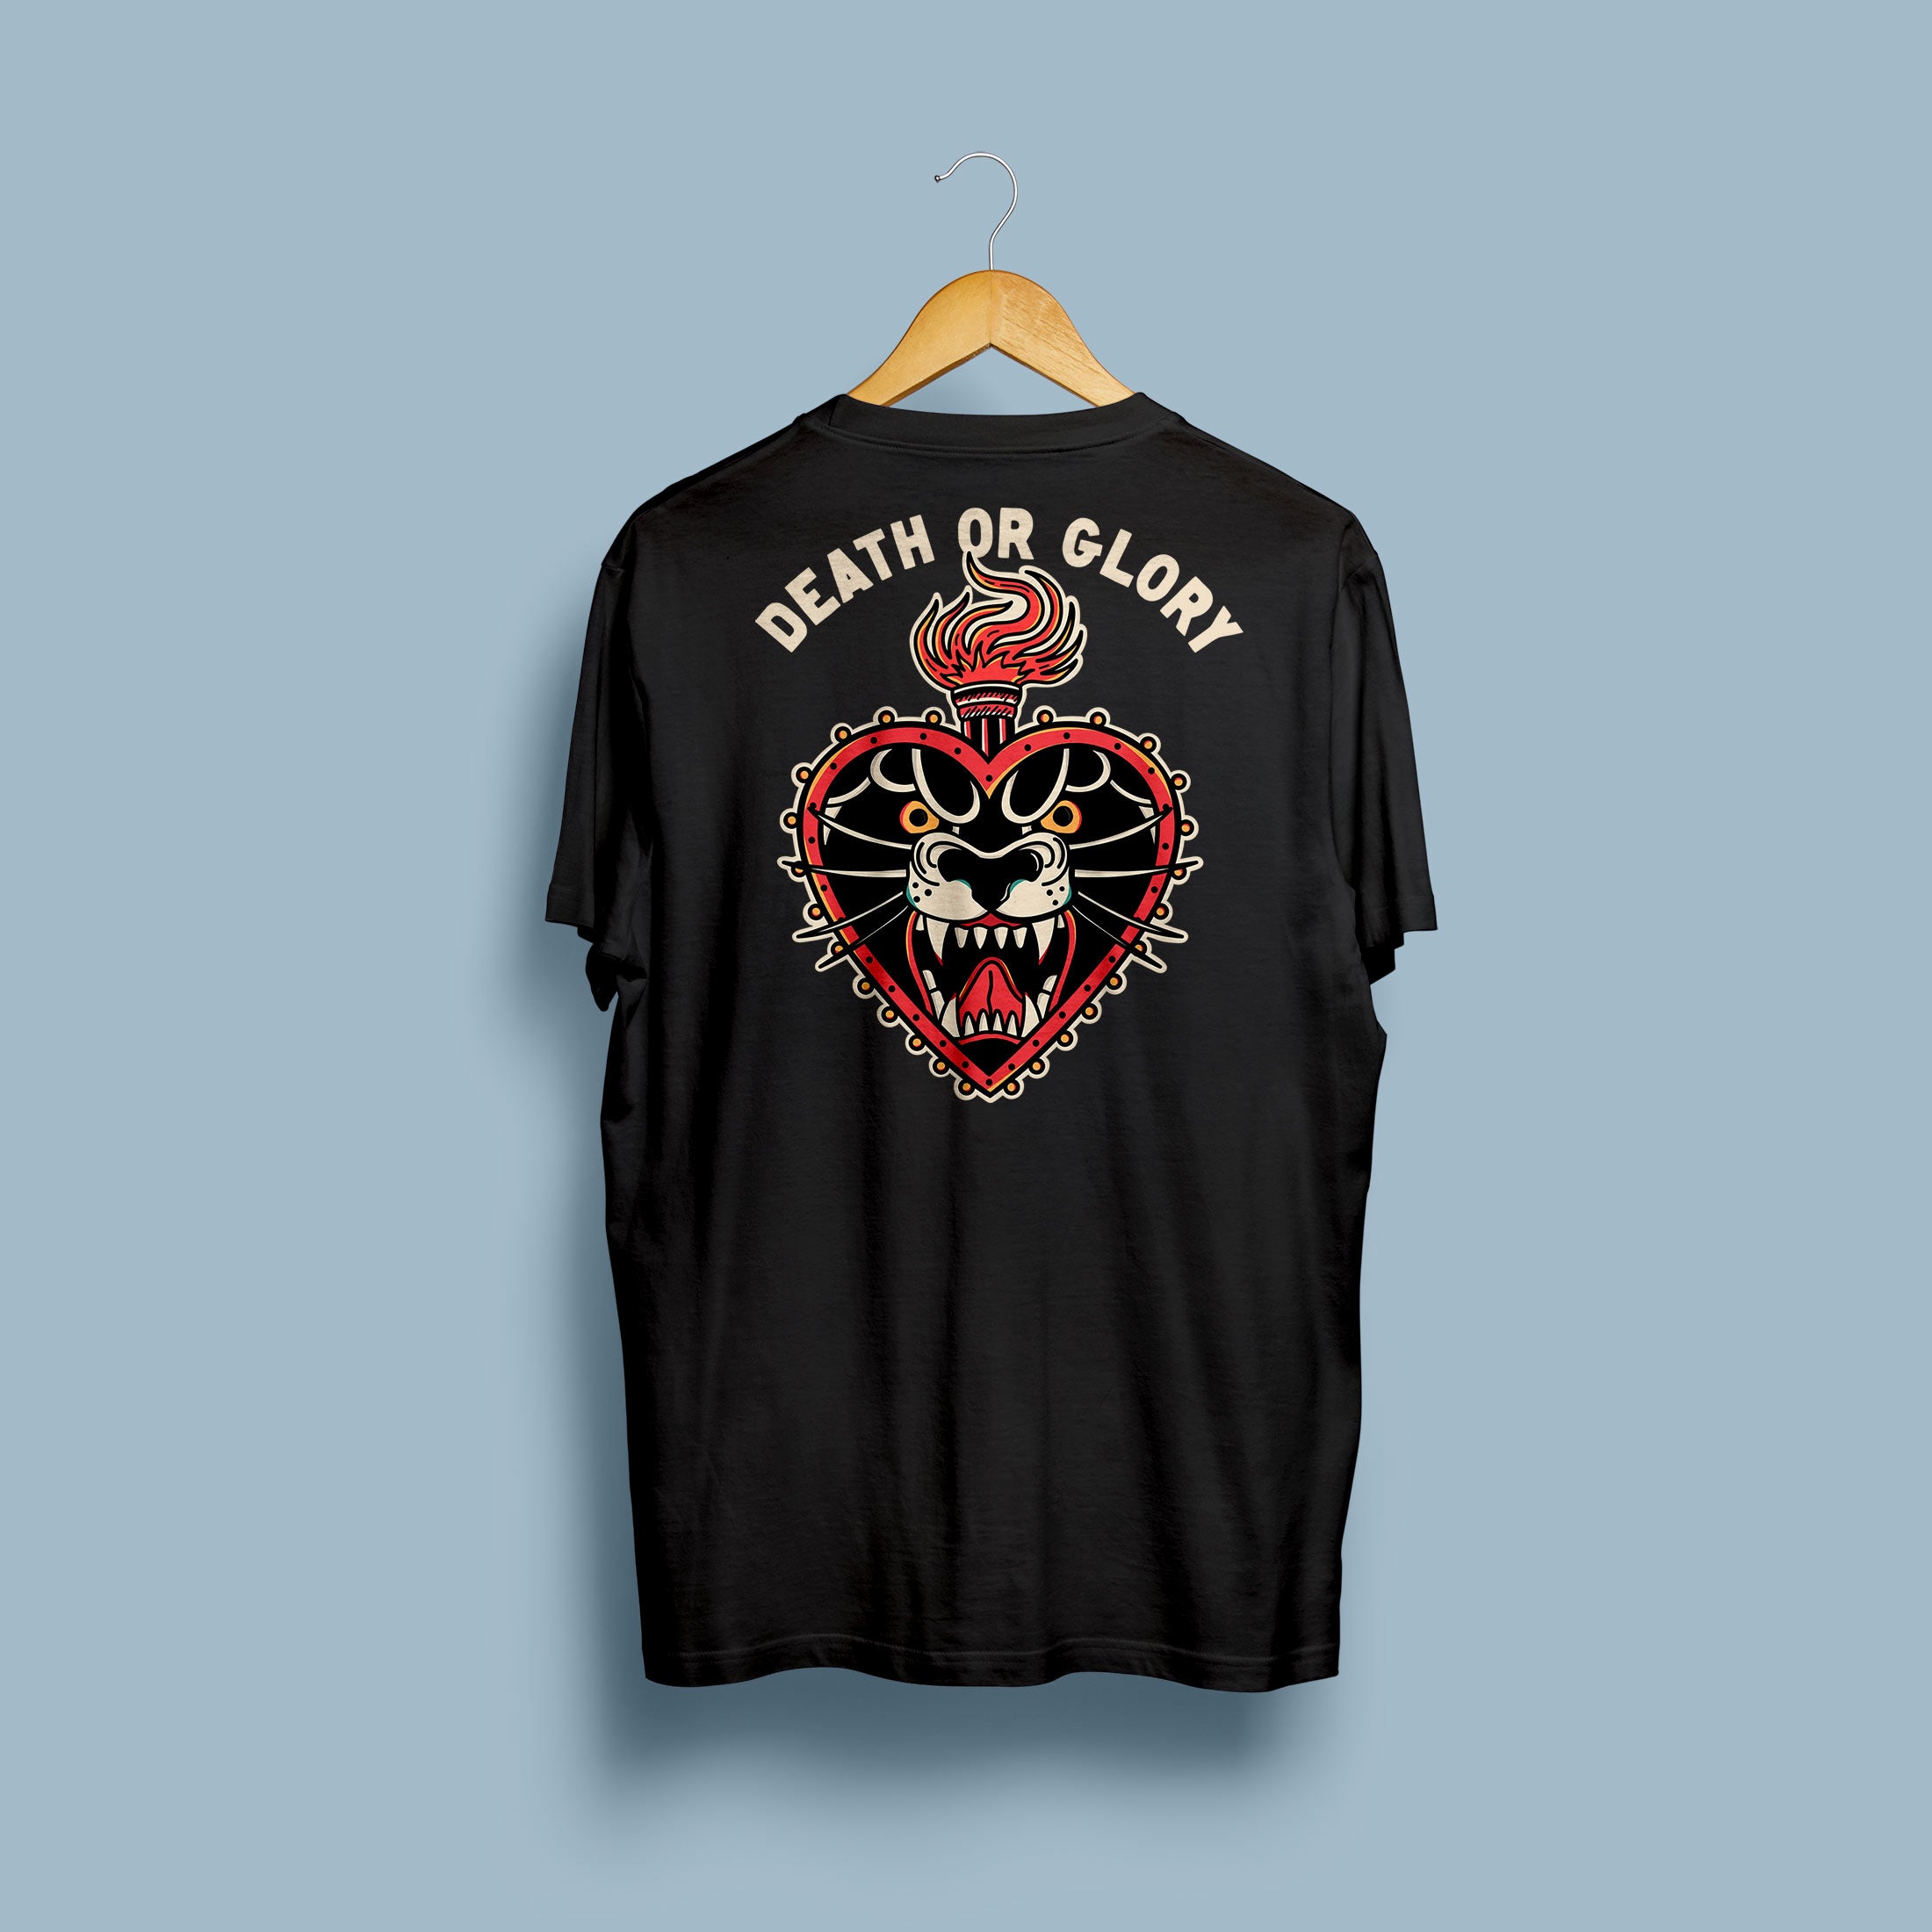 Death or Glory T-shirt